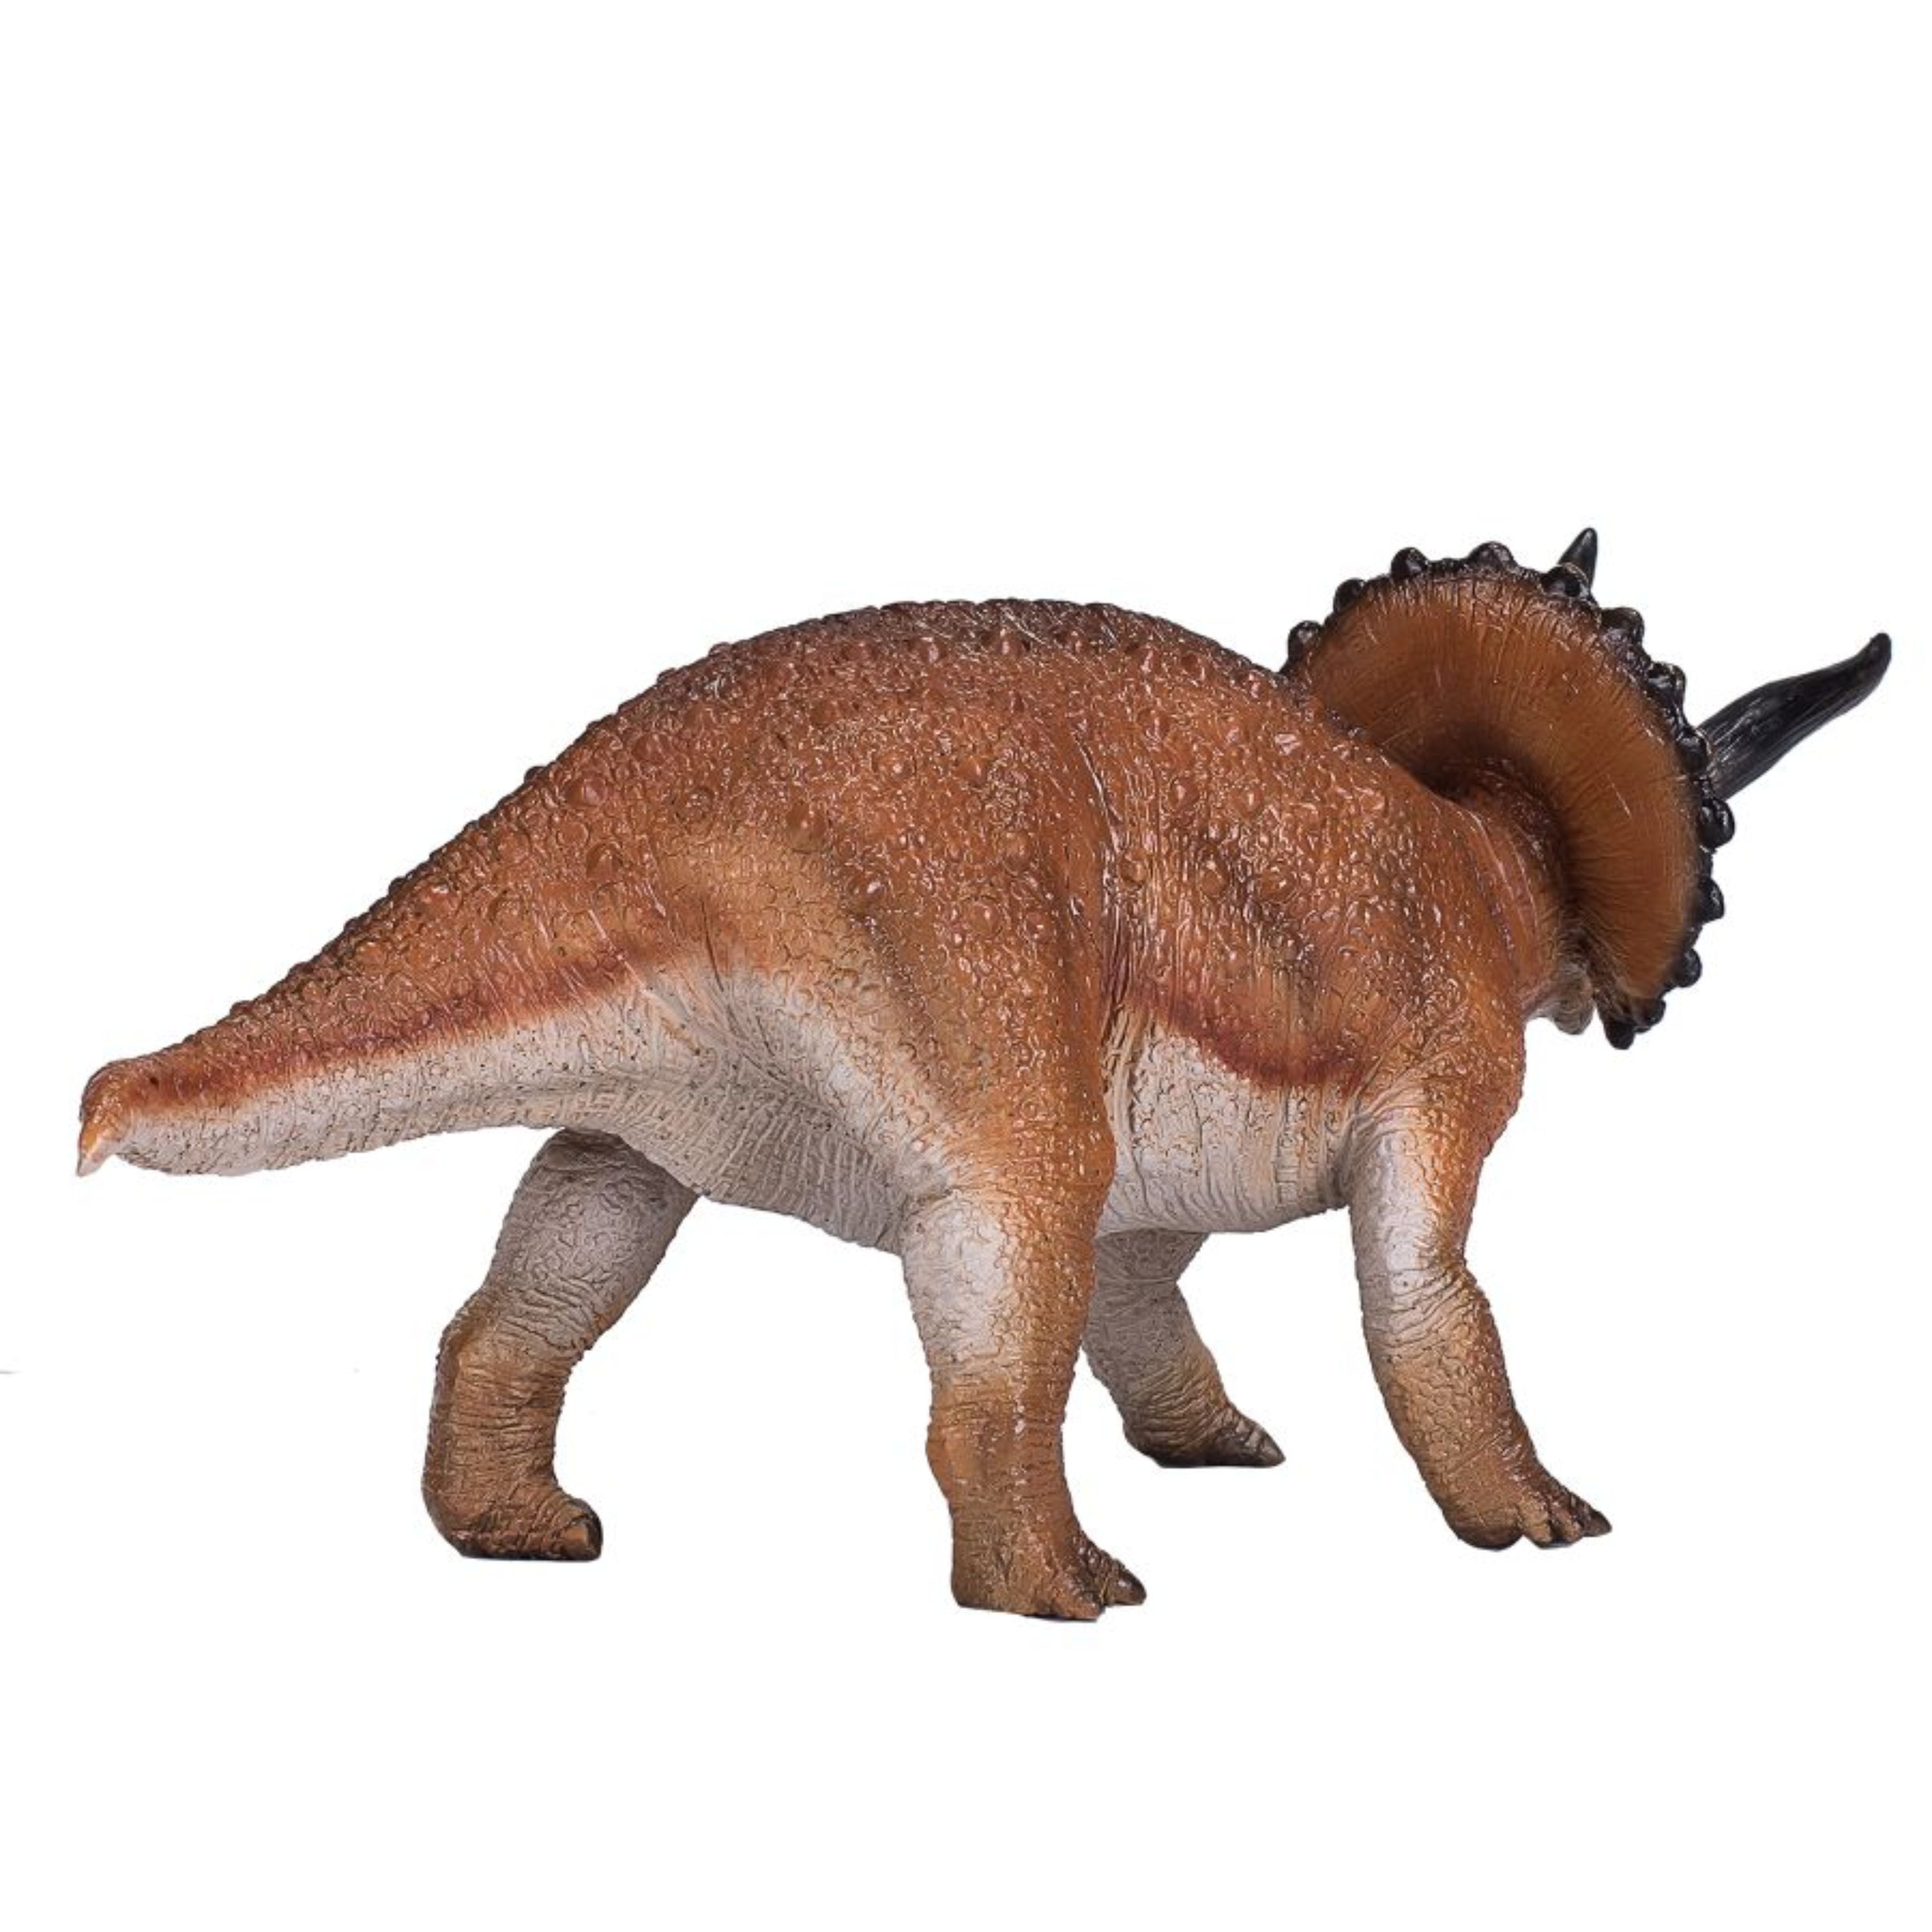 Mojo TRICERATOPS DINOSAUR model figure toy Jurassic prehistoric figurine gift 